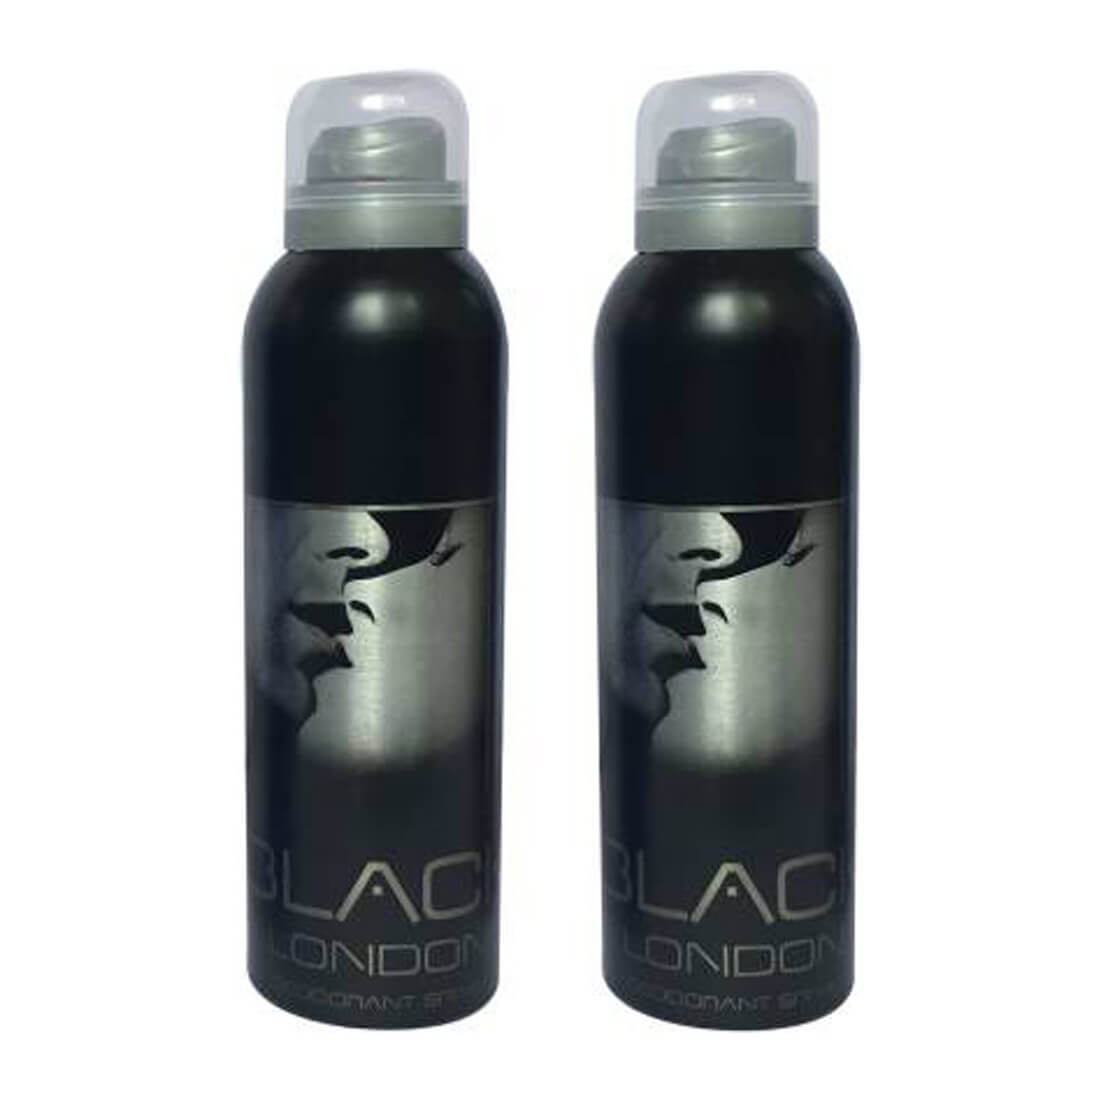 London Black Deodorant Body Spray Pack of 2 x 200ml